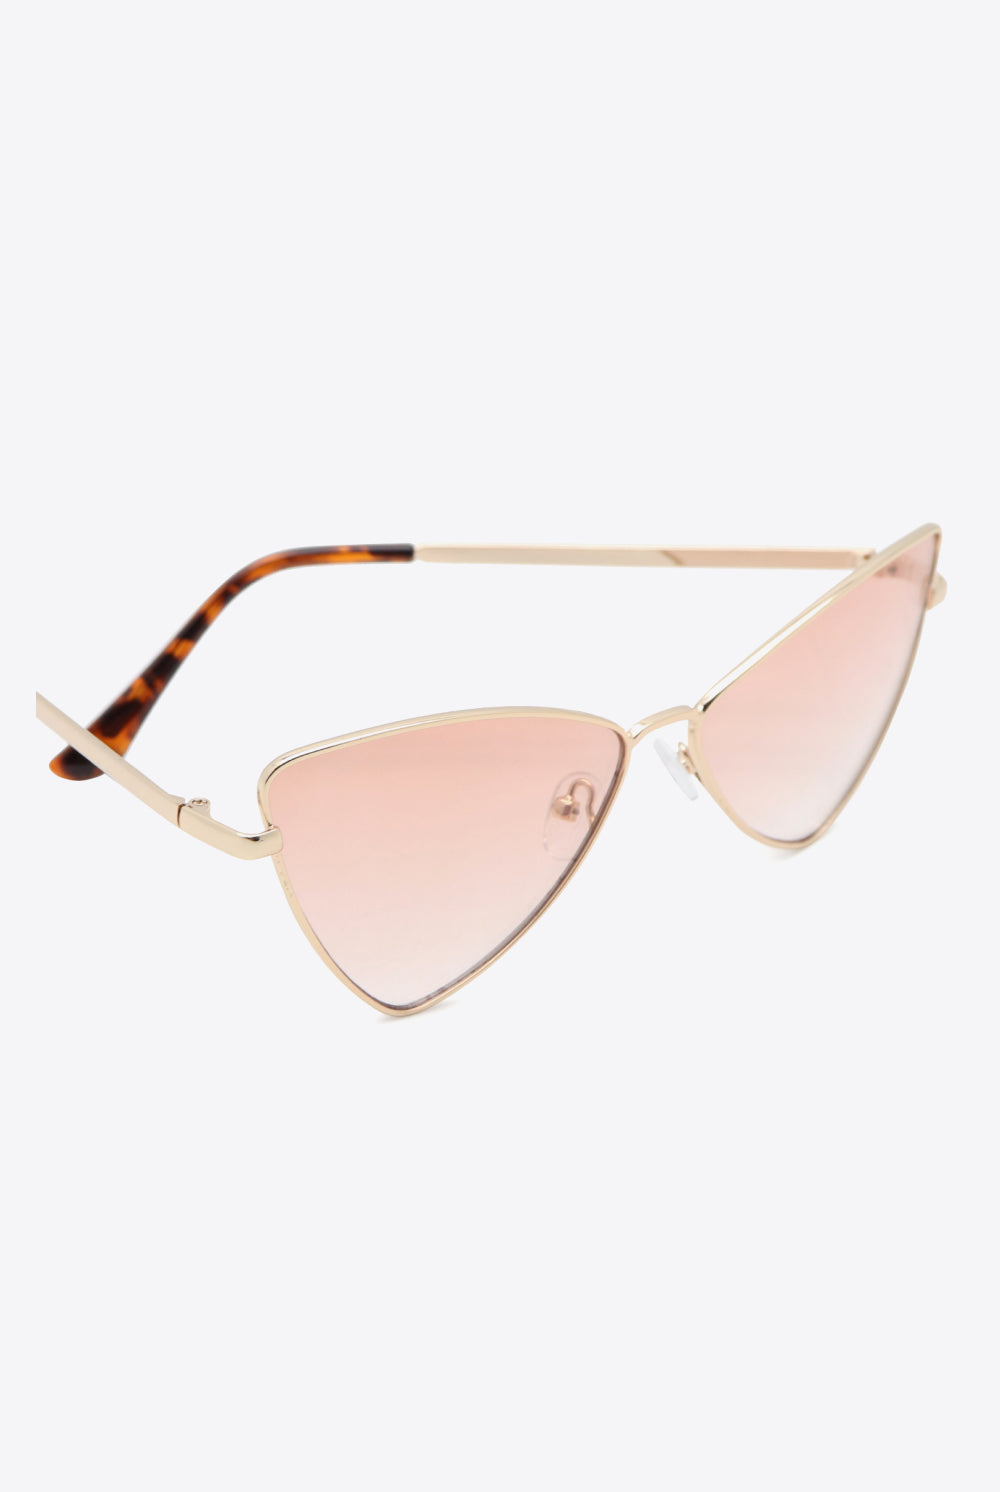 White Smoke My Future Metal Frame Cat-Eye Sunglasses- Pink Sunglasses